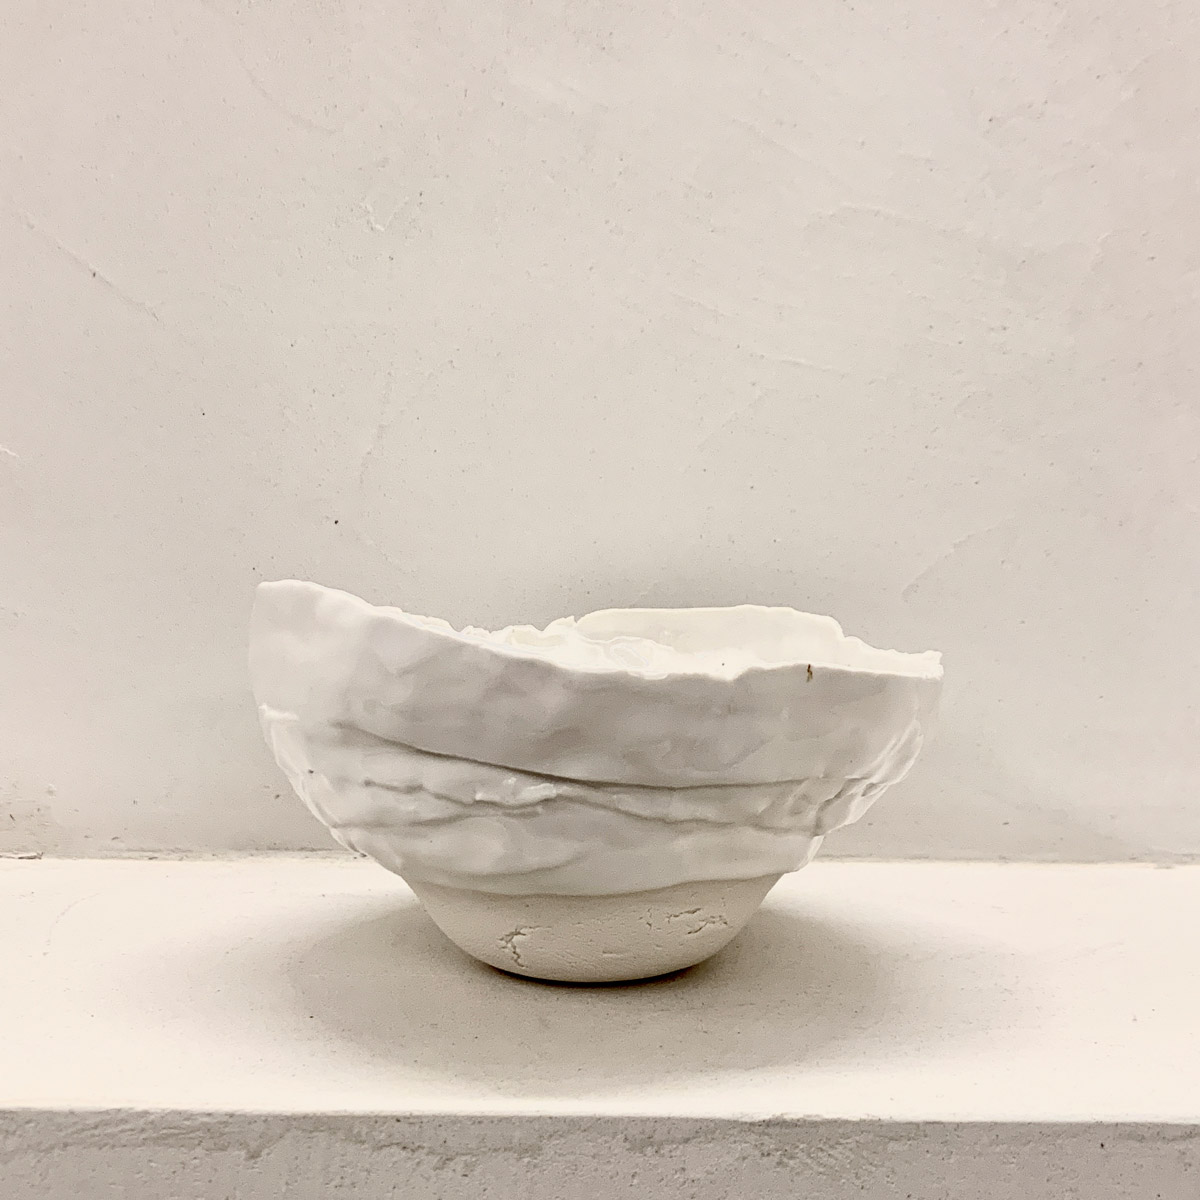 NewingerART: "Porcelain bowl" (Maja Zenz)